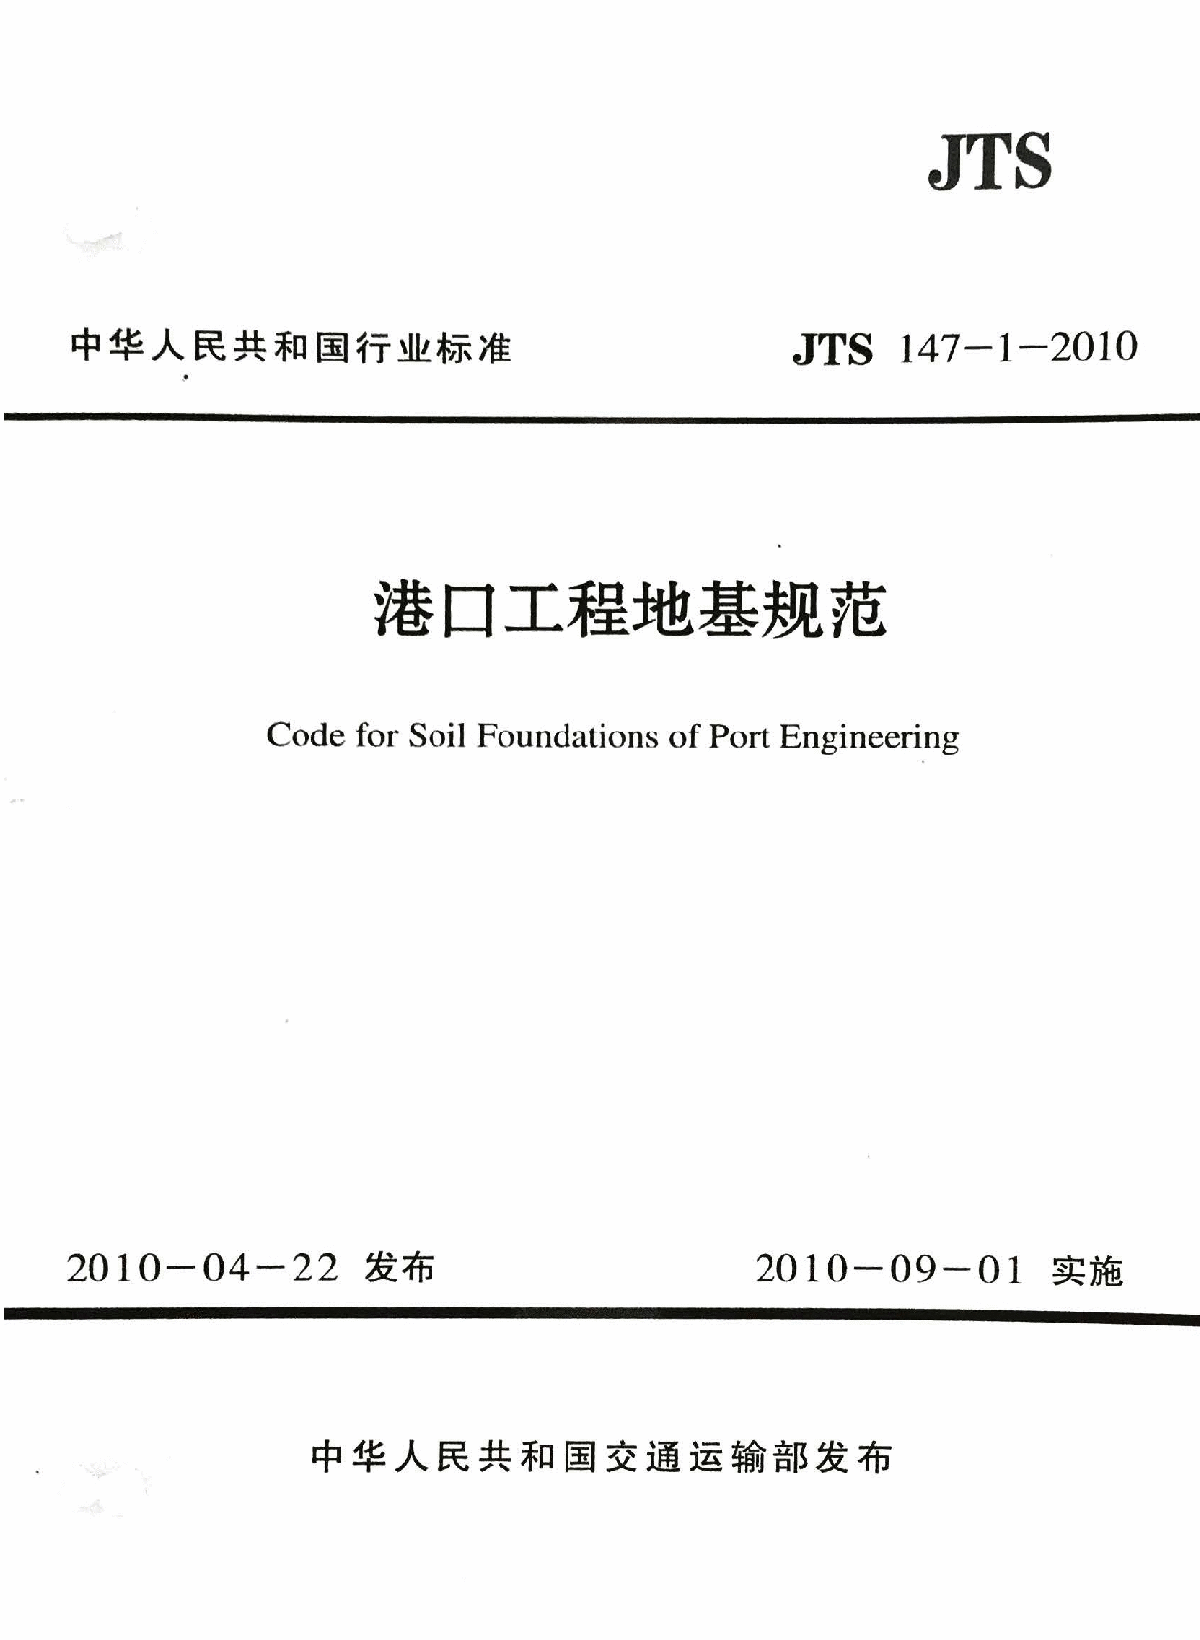 JTS 147-1-2010 港口工程地基规范